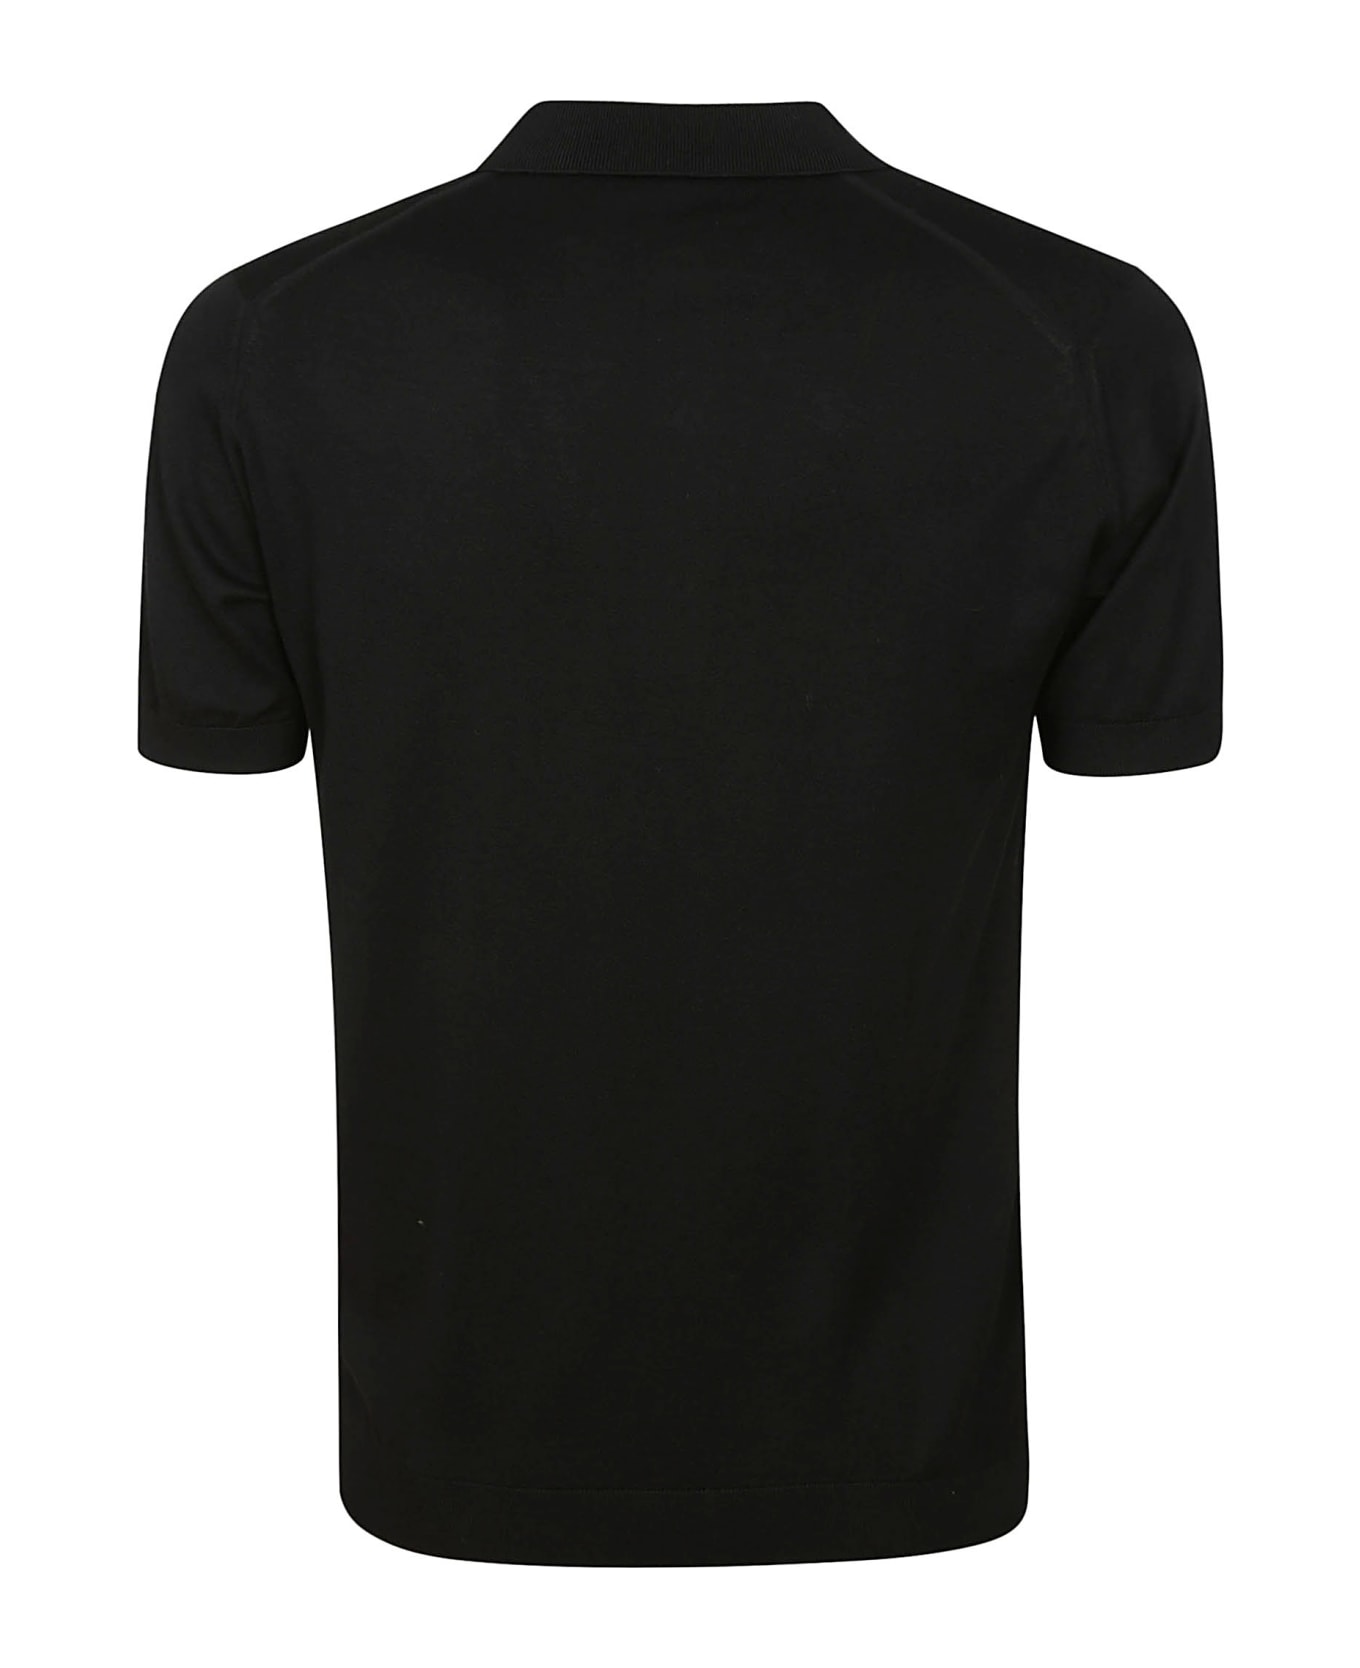 John Smedley Adrian Shirt Ss - Black